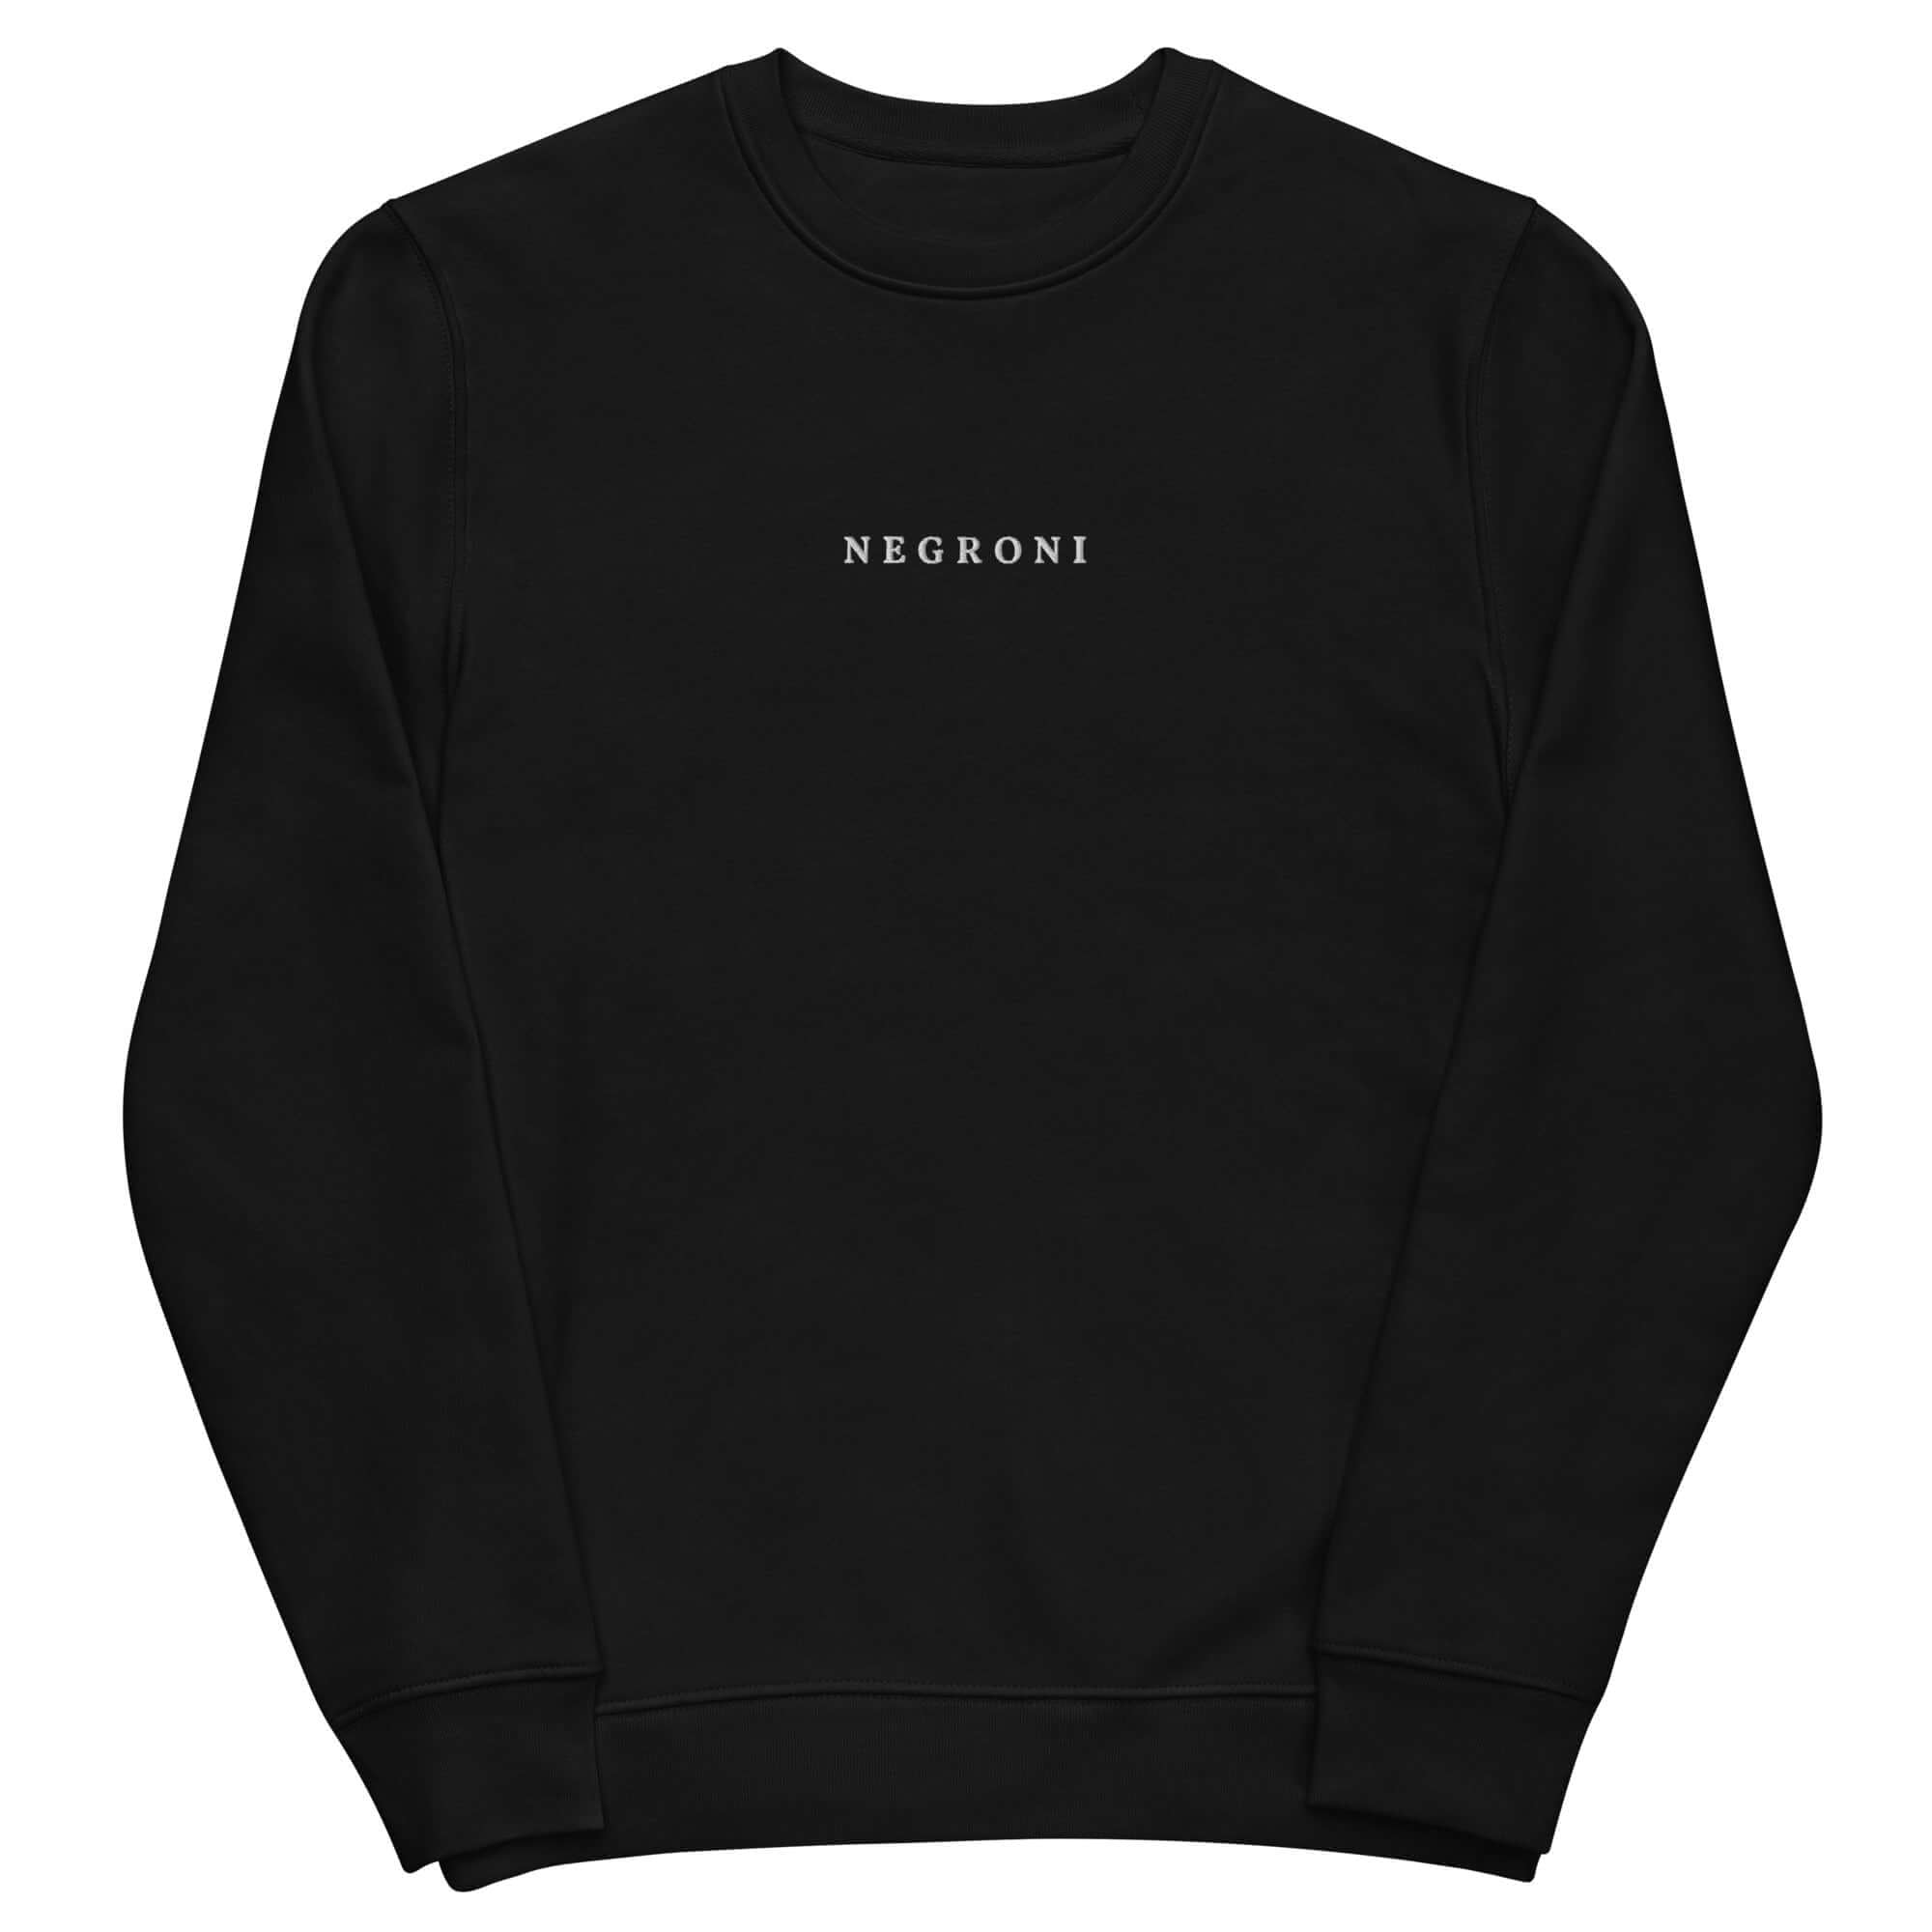 Negroni - Organic Embroidered Sweatshirt - The Refined Spirit